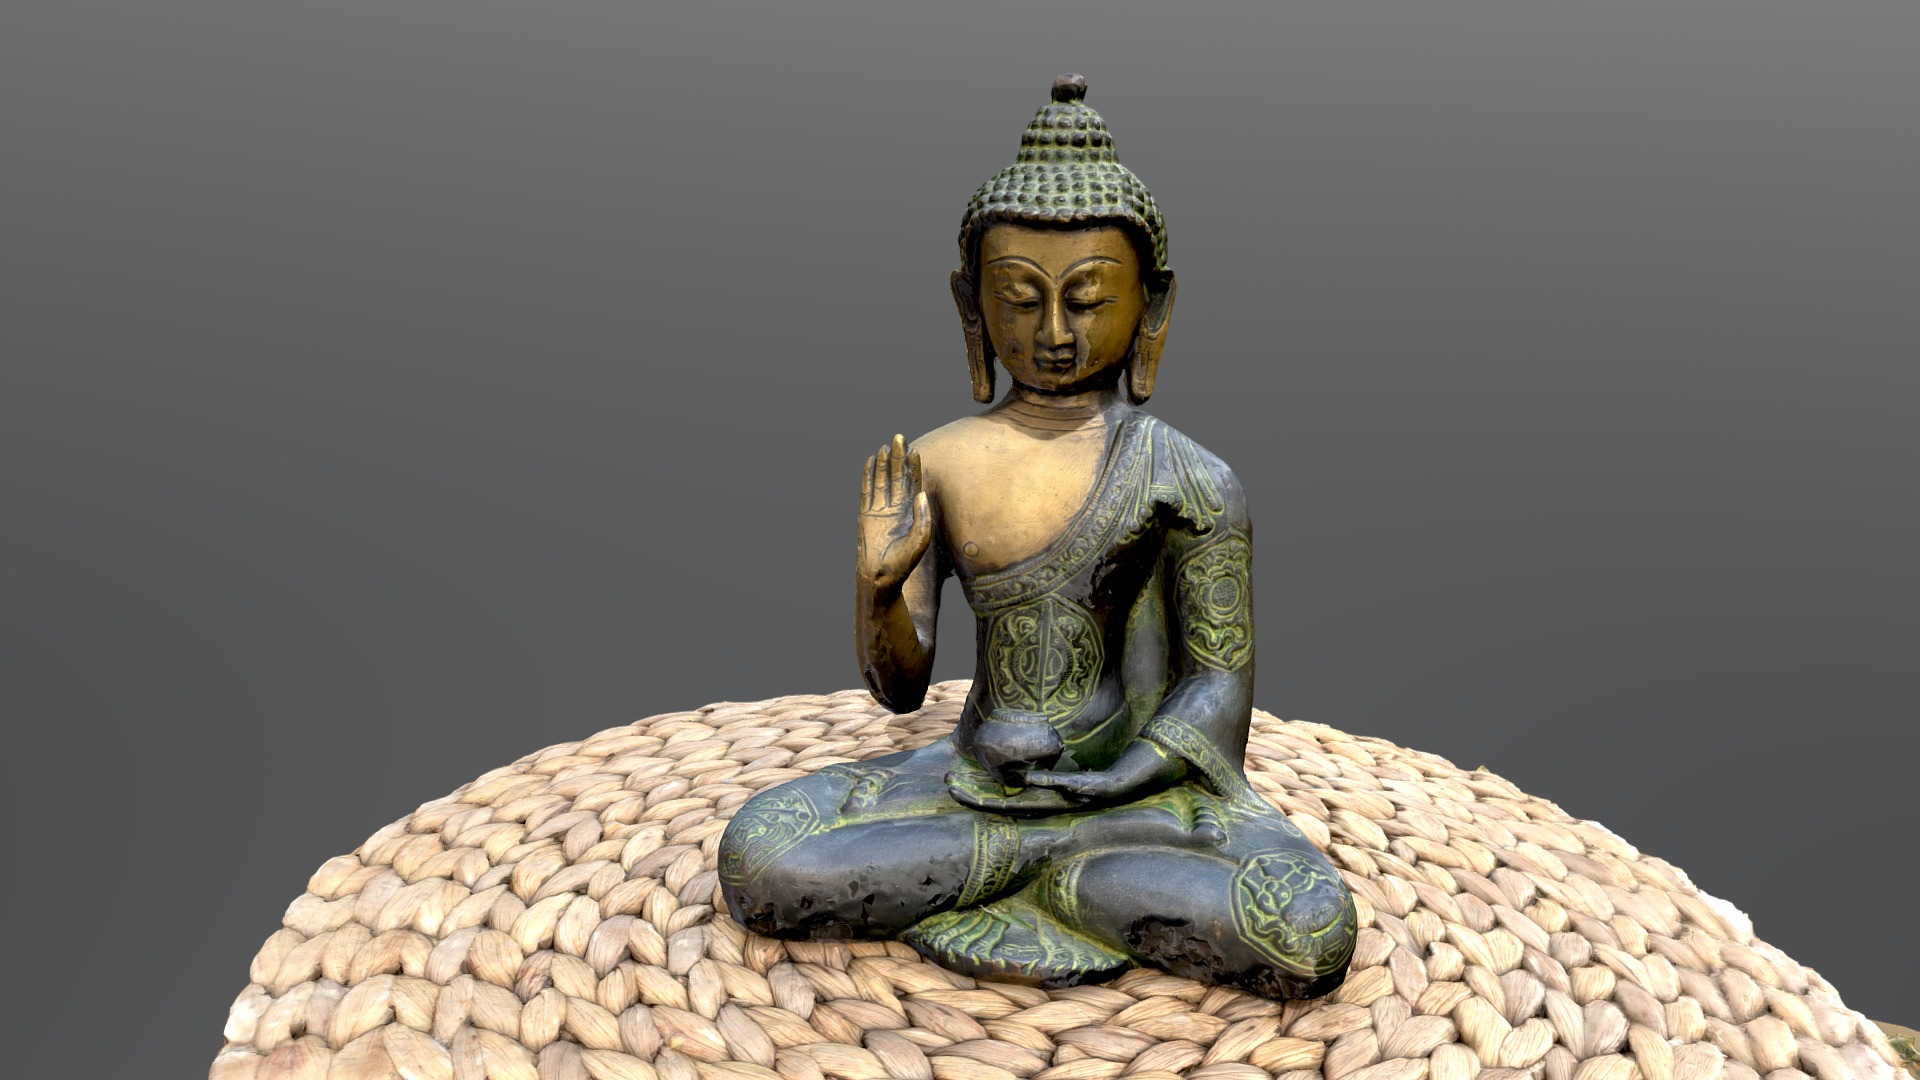 3D model Buddha statue, sitting metal lotus - This is a 3D model of the Buddha statue, sitting metal lotus. The 3D model is about a statue of a person sitting on a rock.